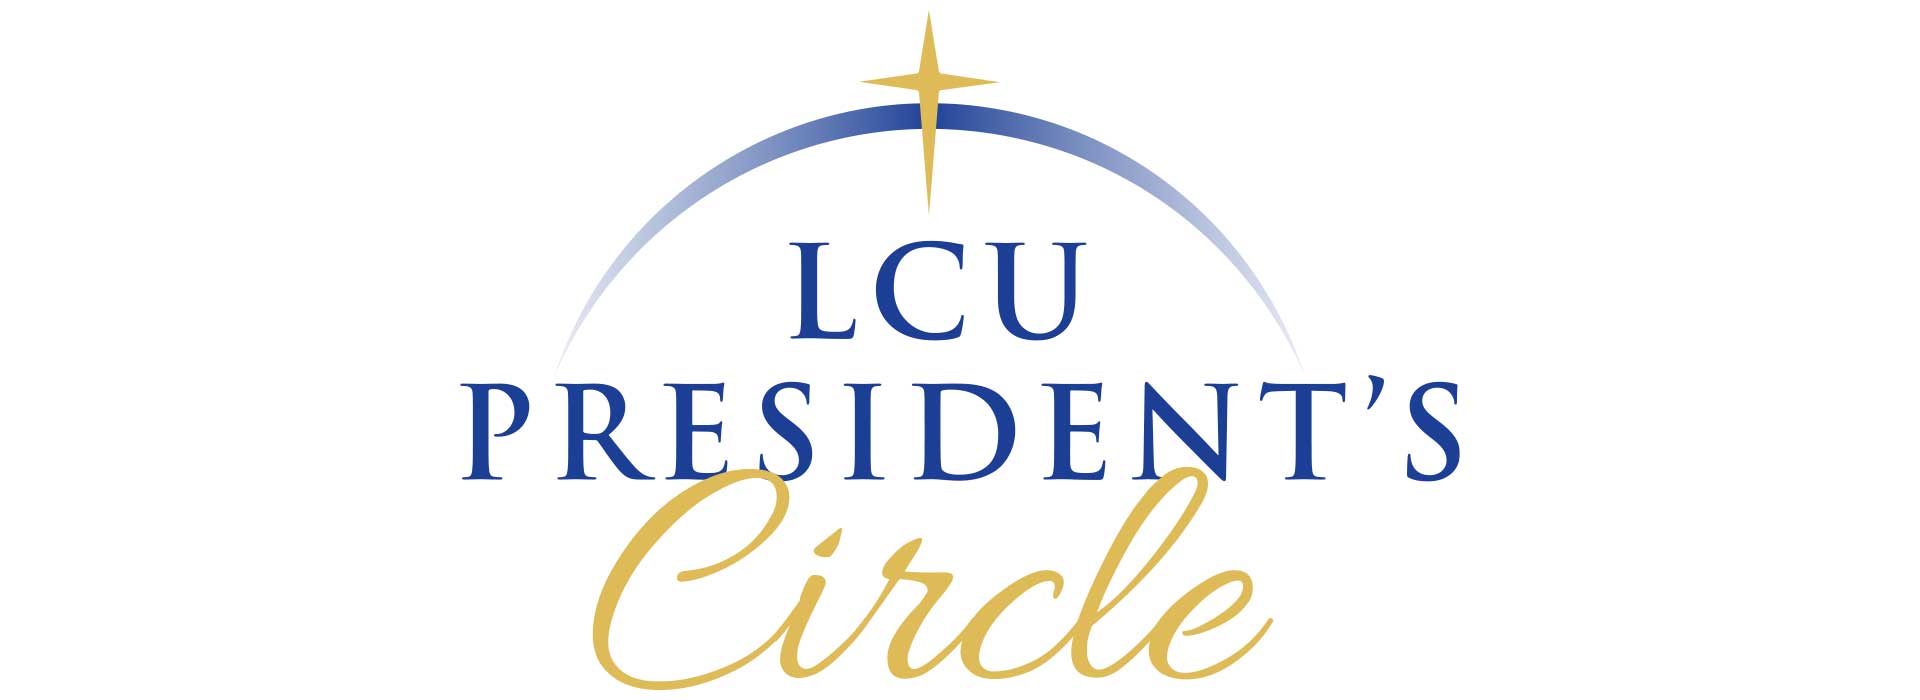 President's Circle Logo